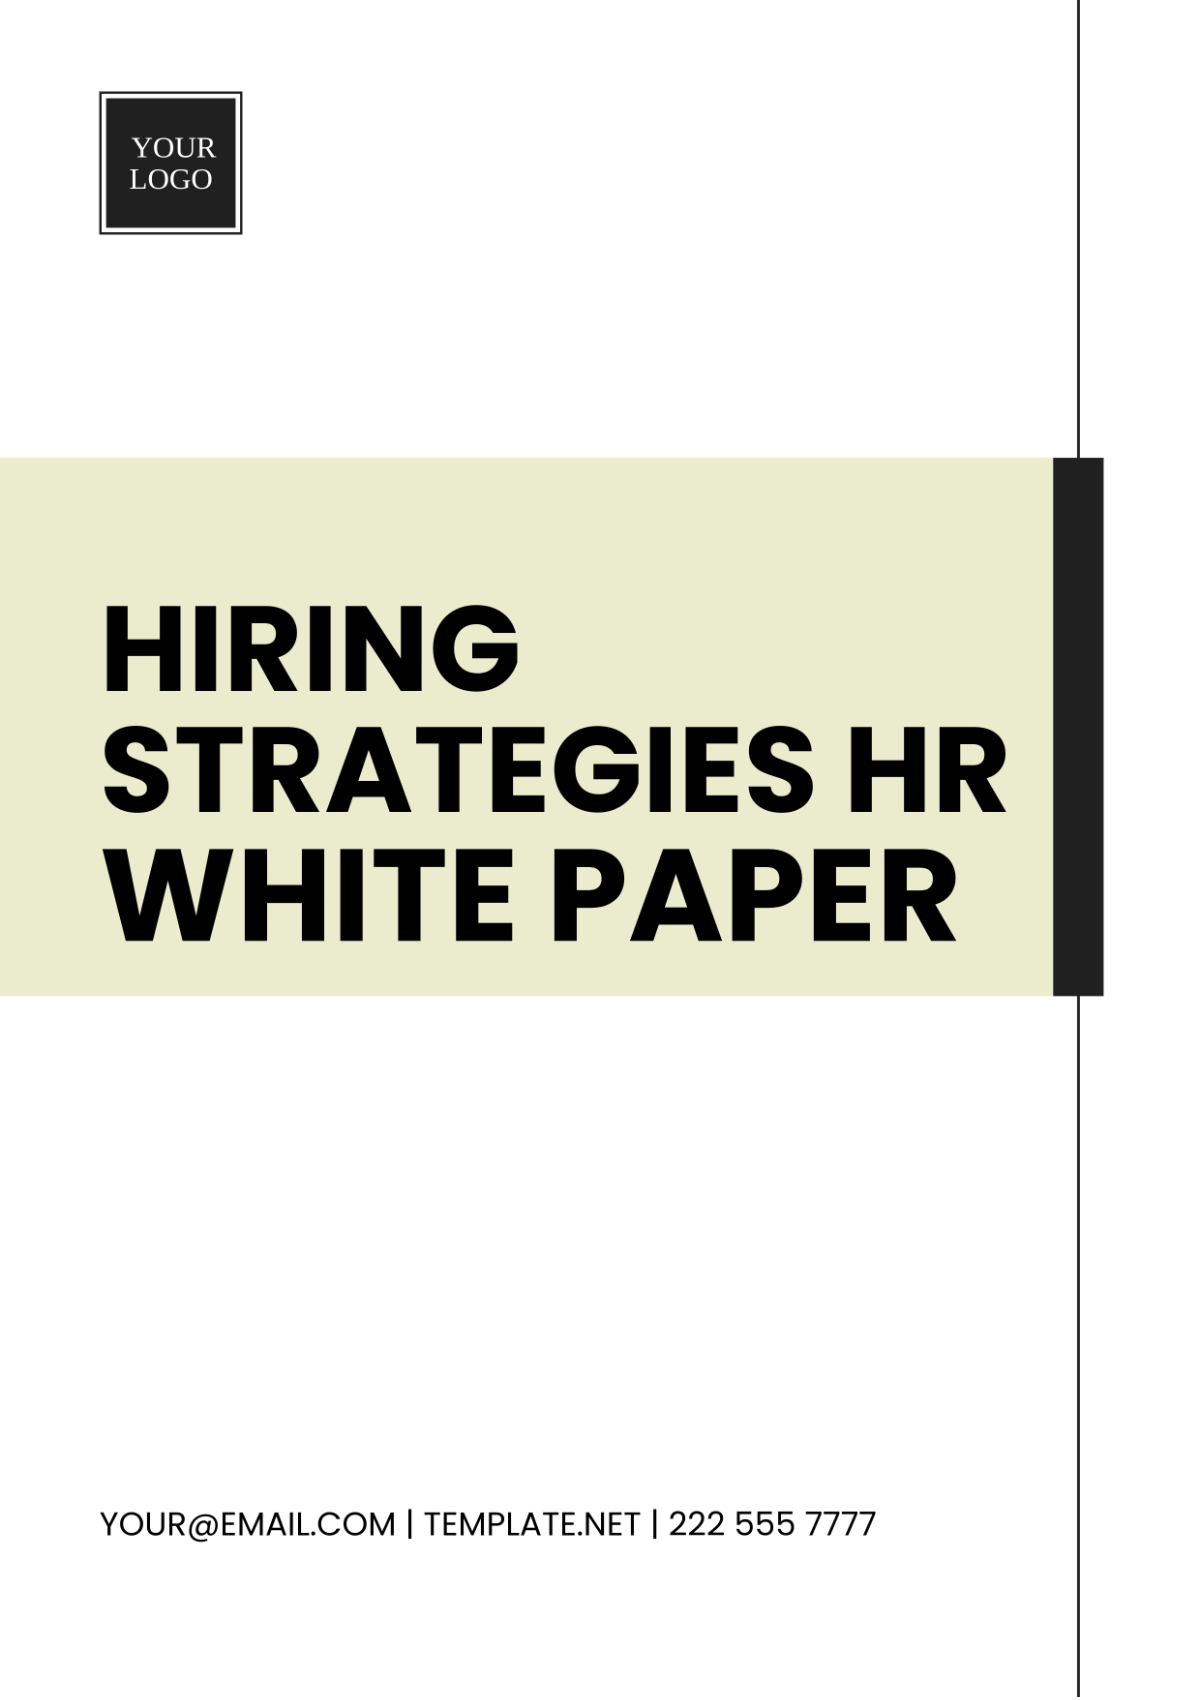 Hiring Strategies HR White Paper Template